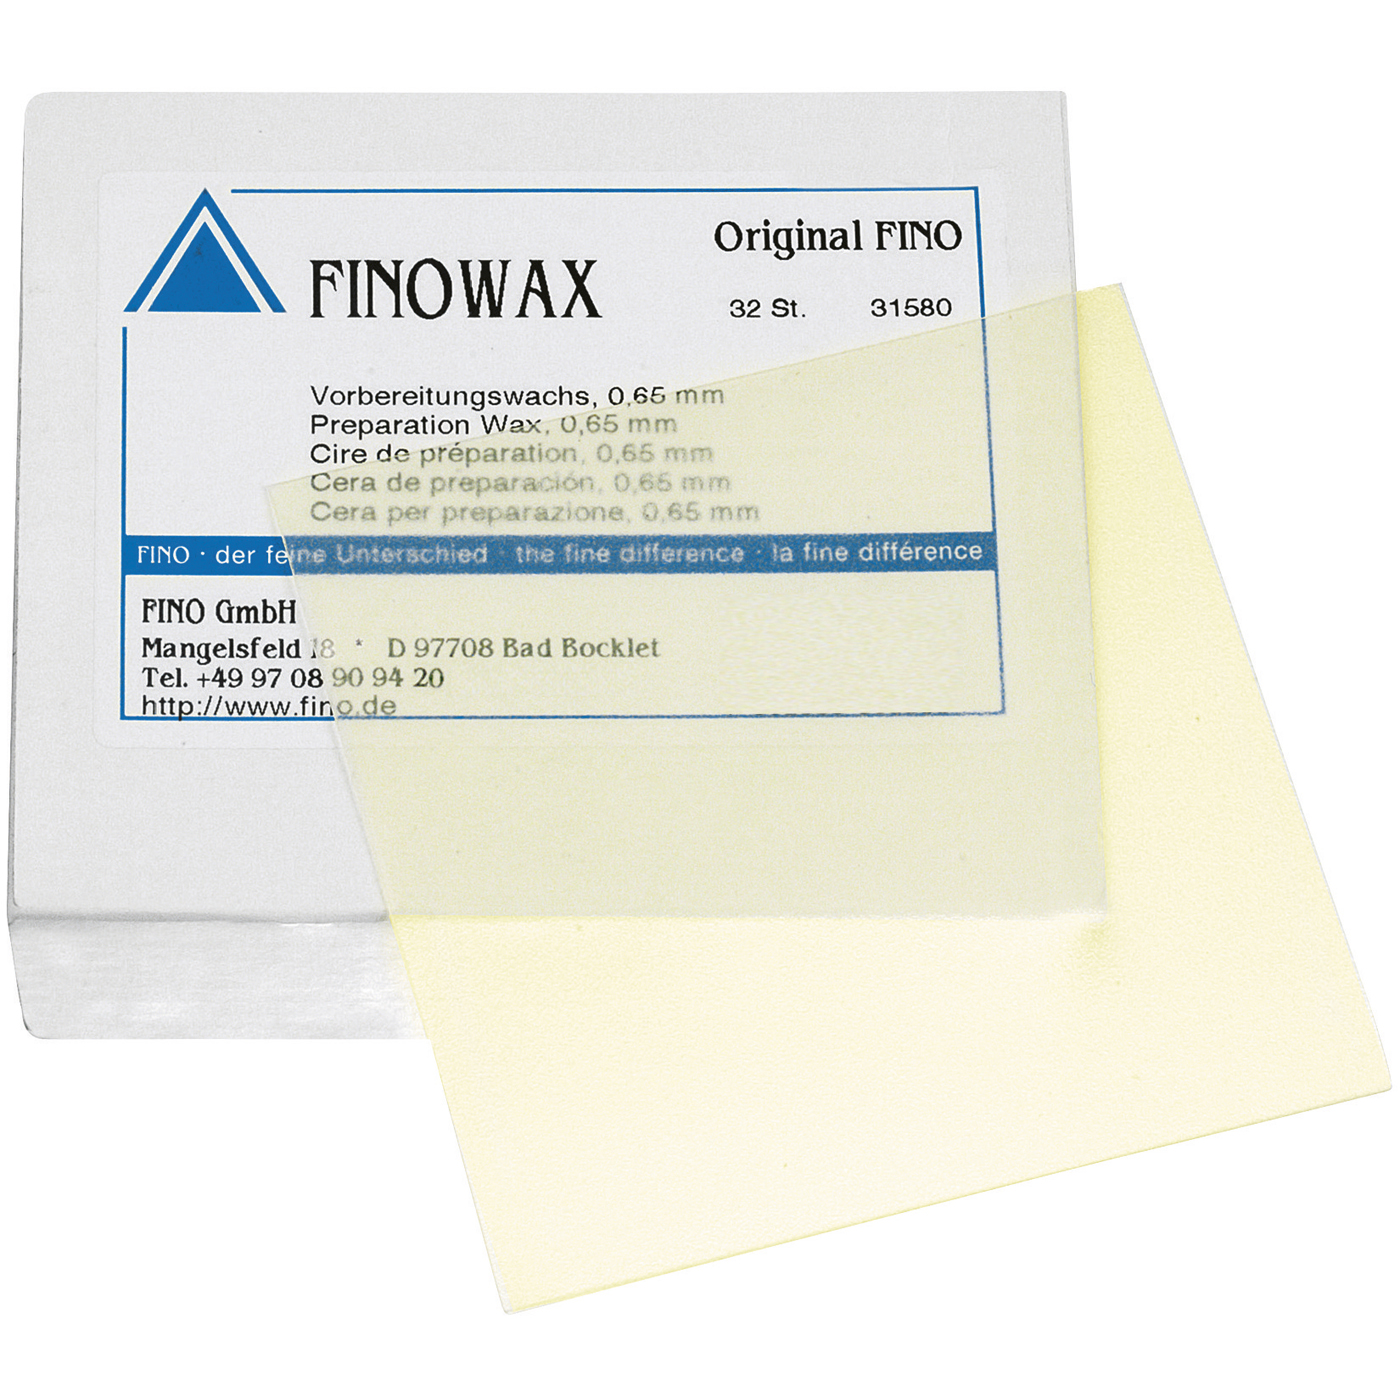 FINOWAX Preparation Wax, 0.65 mm - 32 pieces